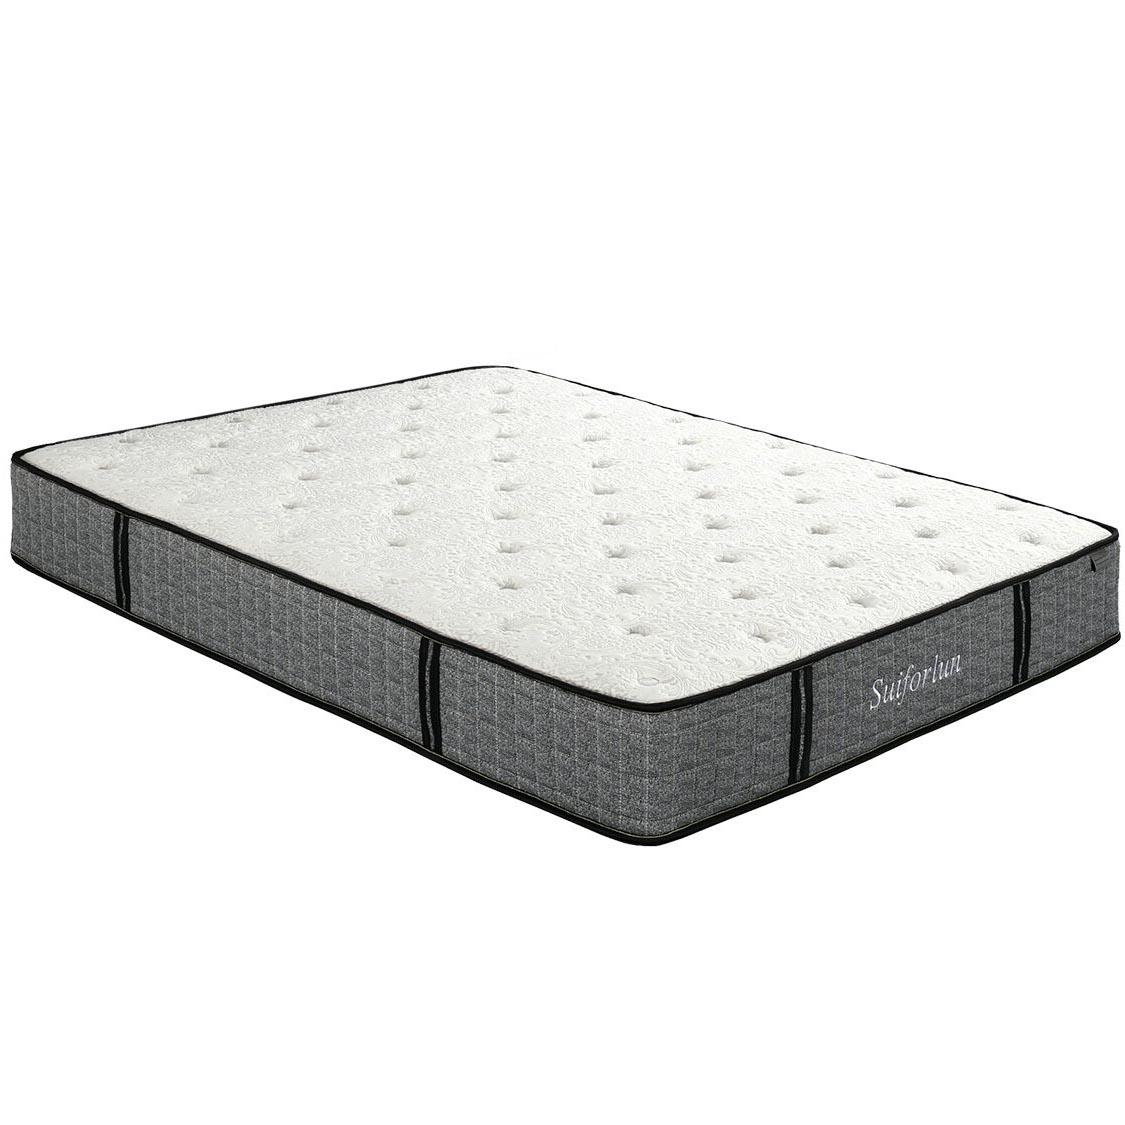 Suiforlun mattress breathable hybrid mattress king customized for family